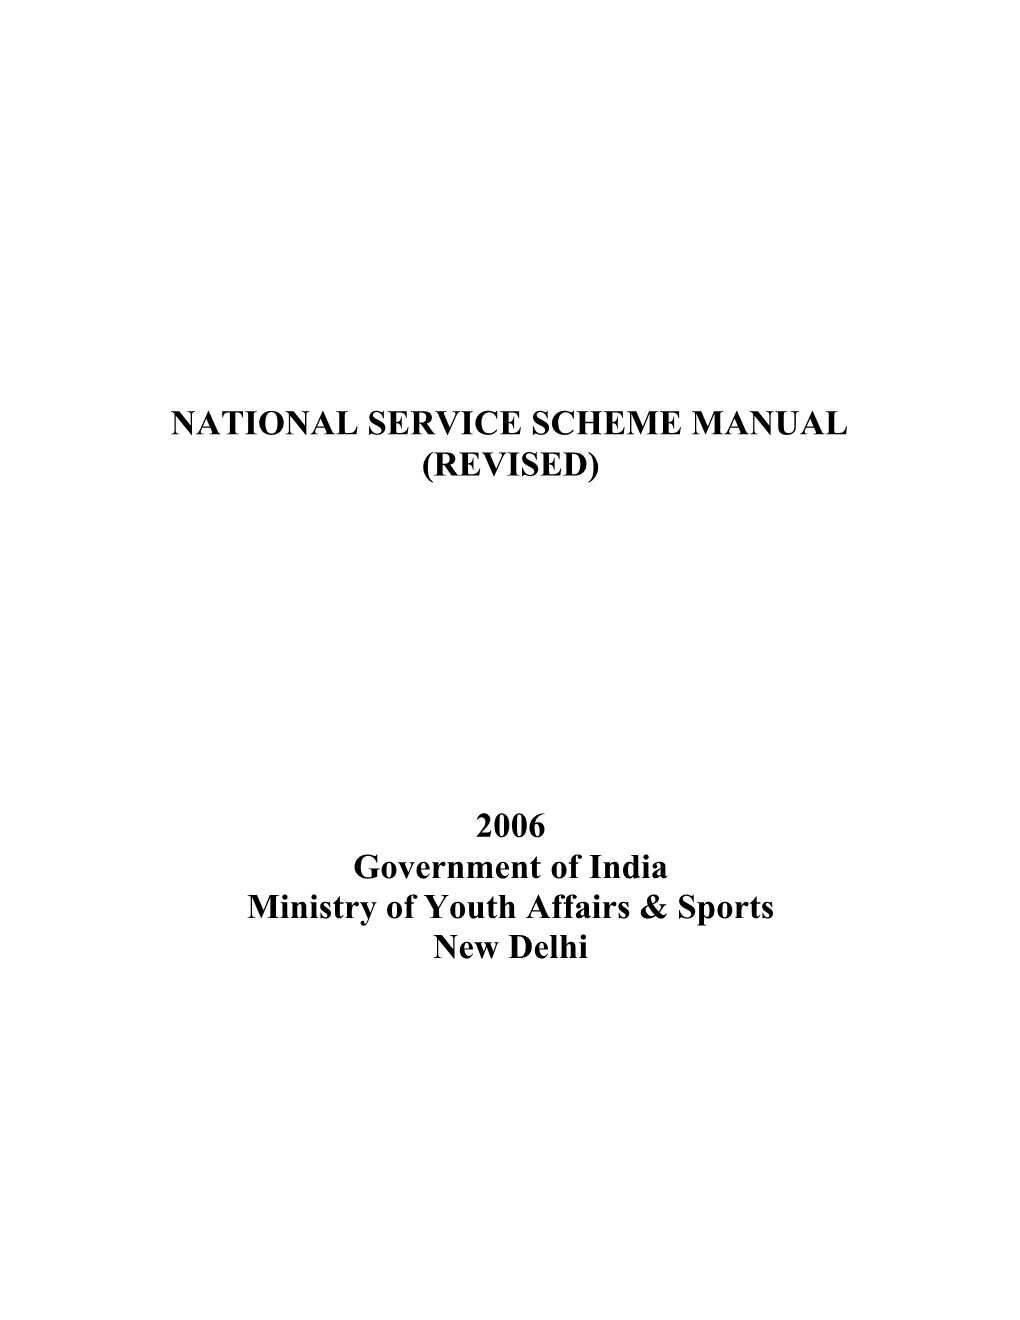 National Service Scheme Manual (Revised)